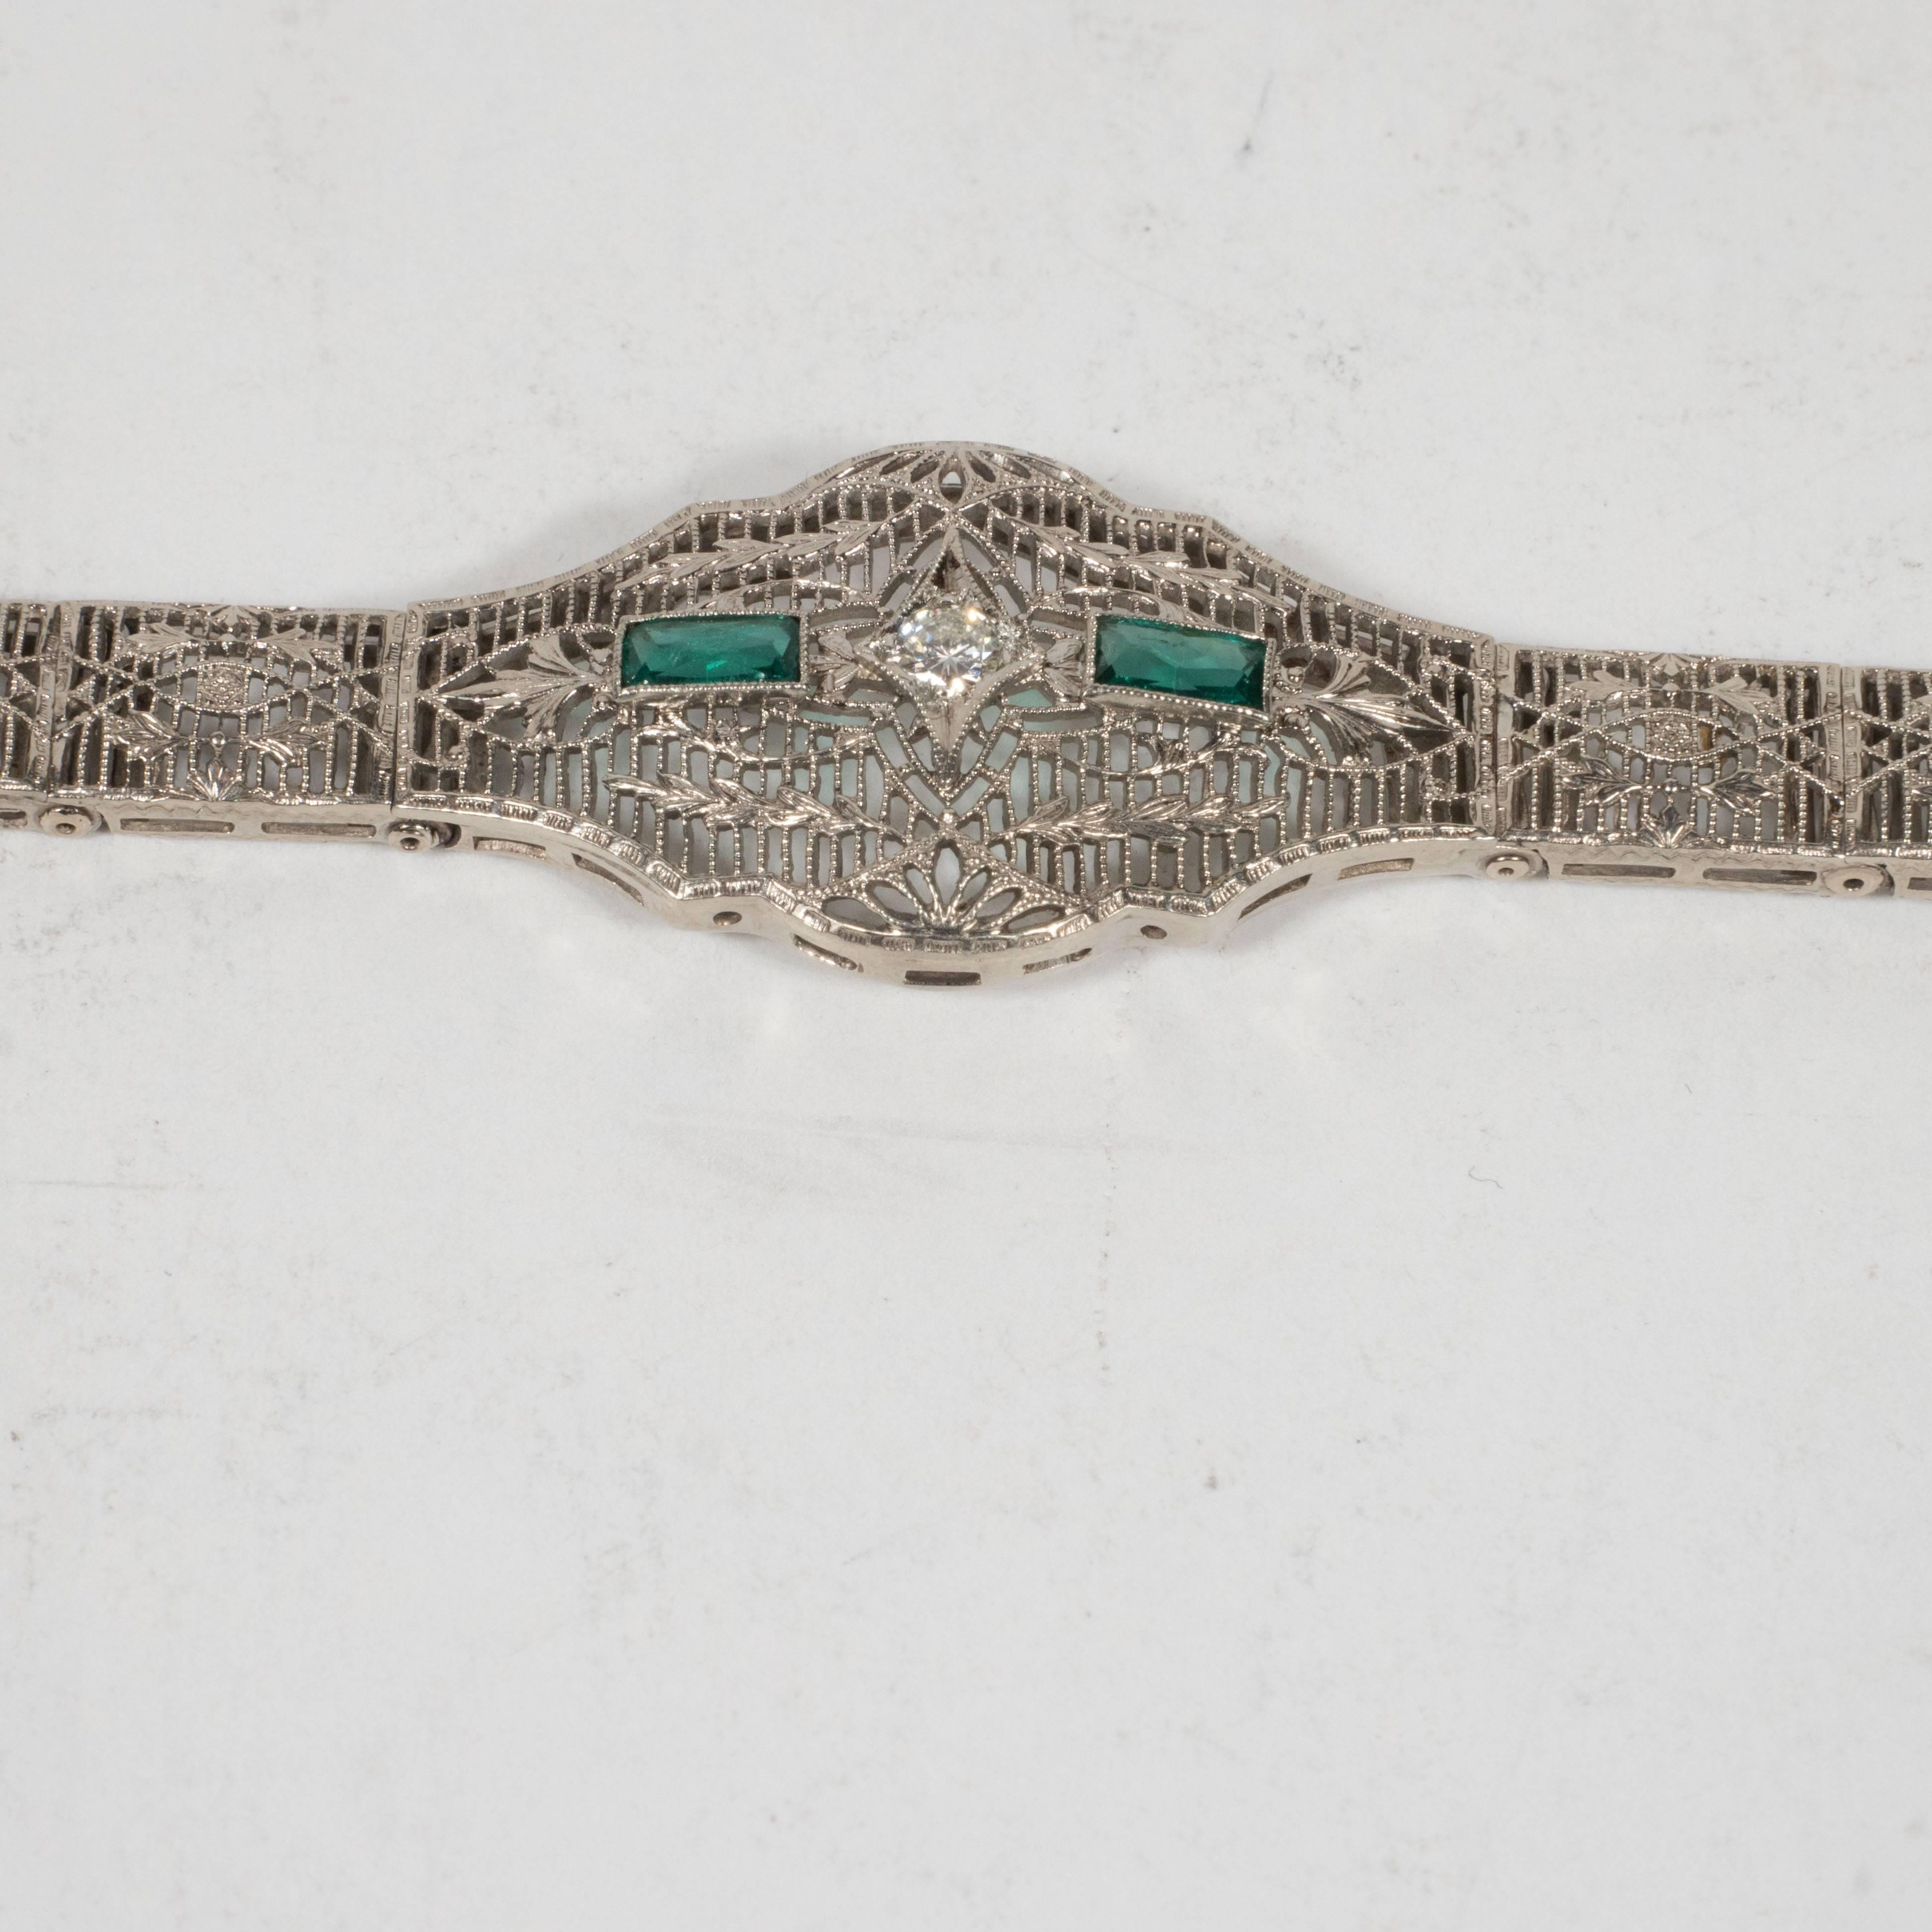 Elegant Art Deco White Gold and Emerald Bracelet with Stylized Foliate Motifs 1